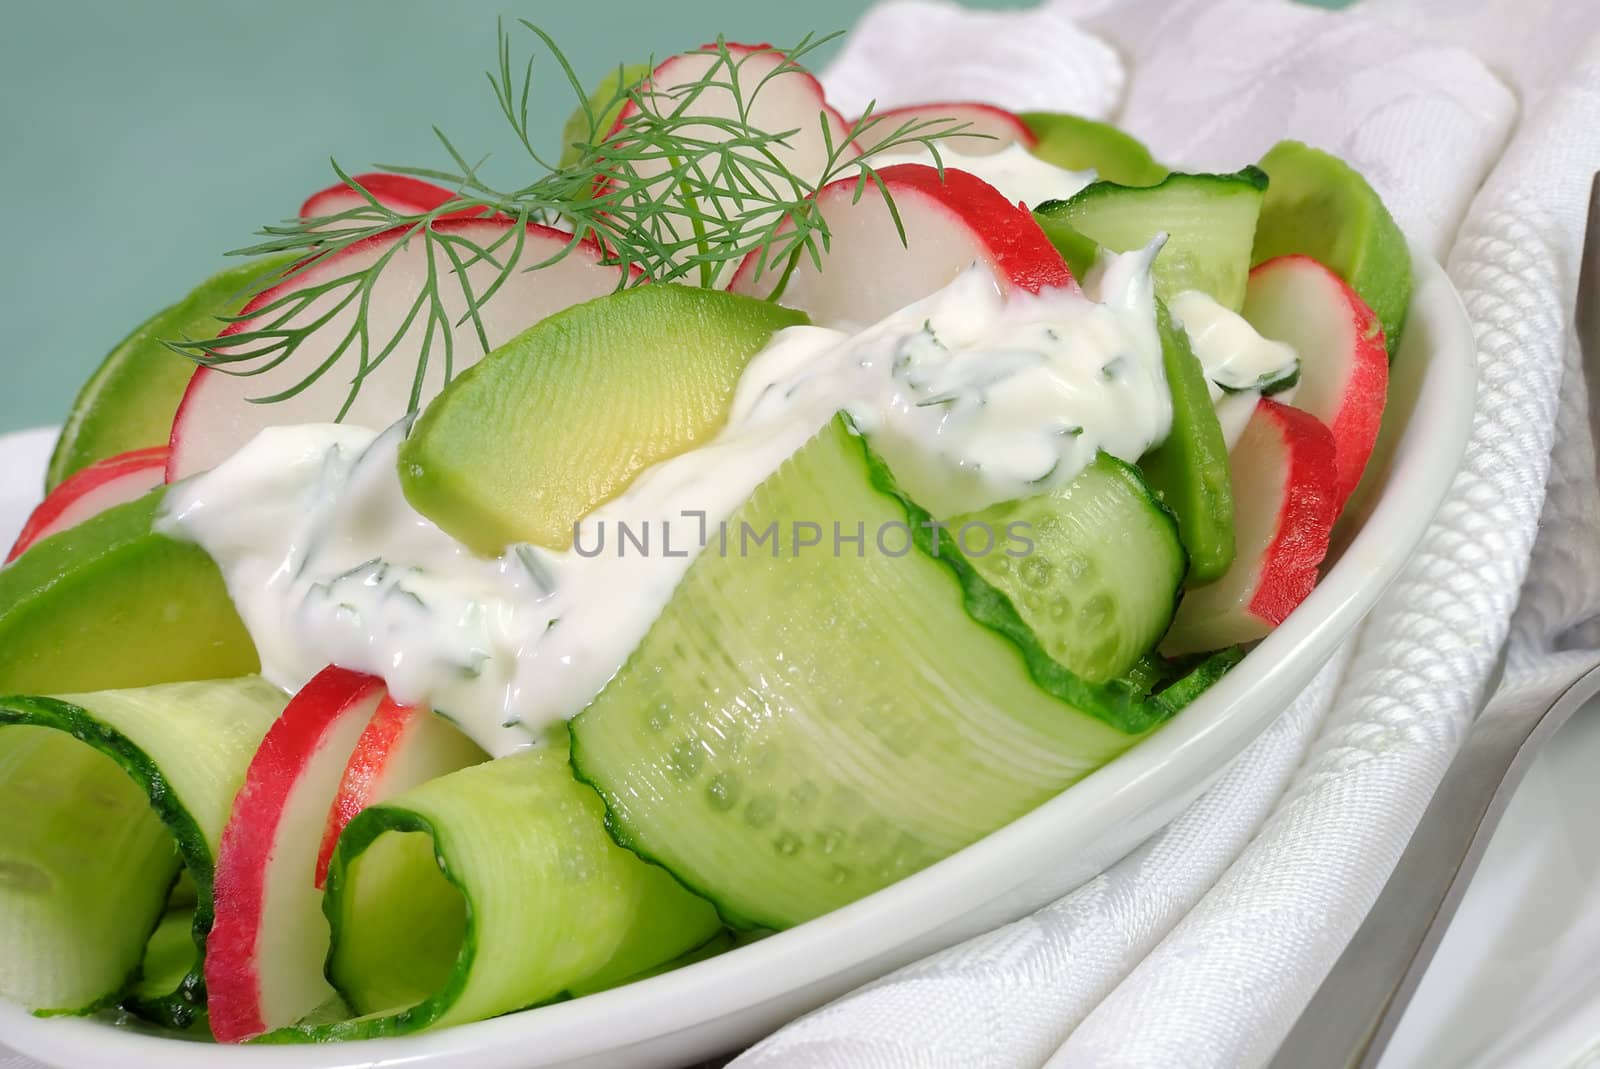 Cucumber salad with radish and avocado cream sauce by Apolonia